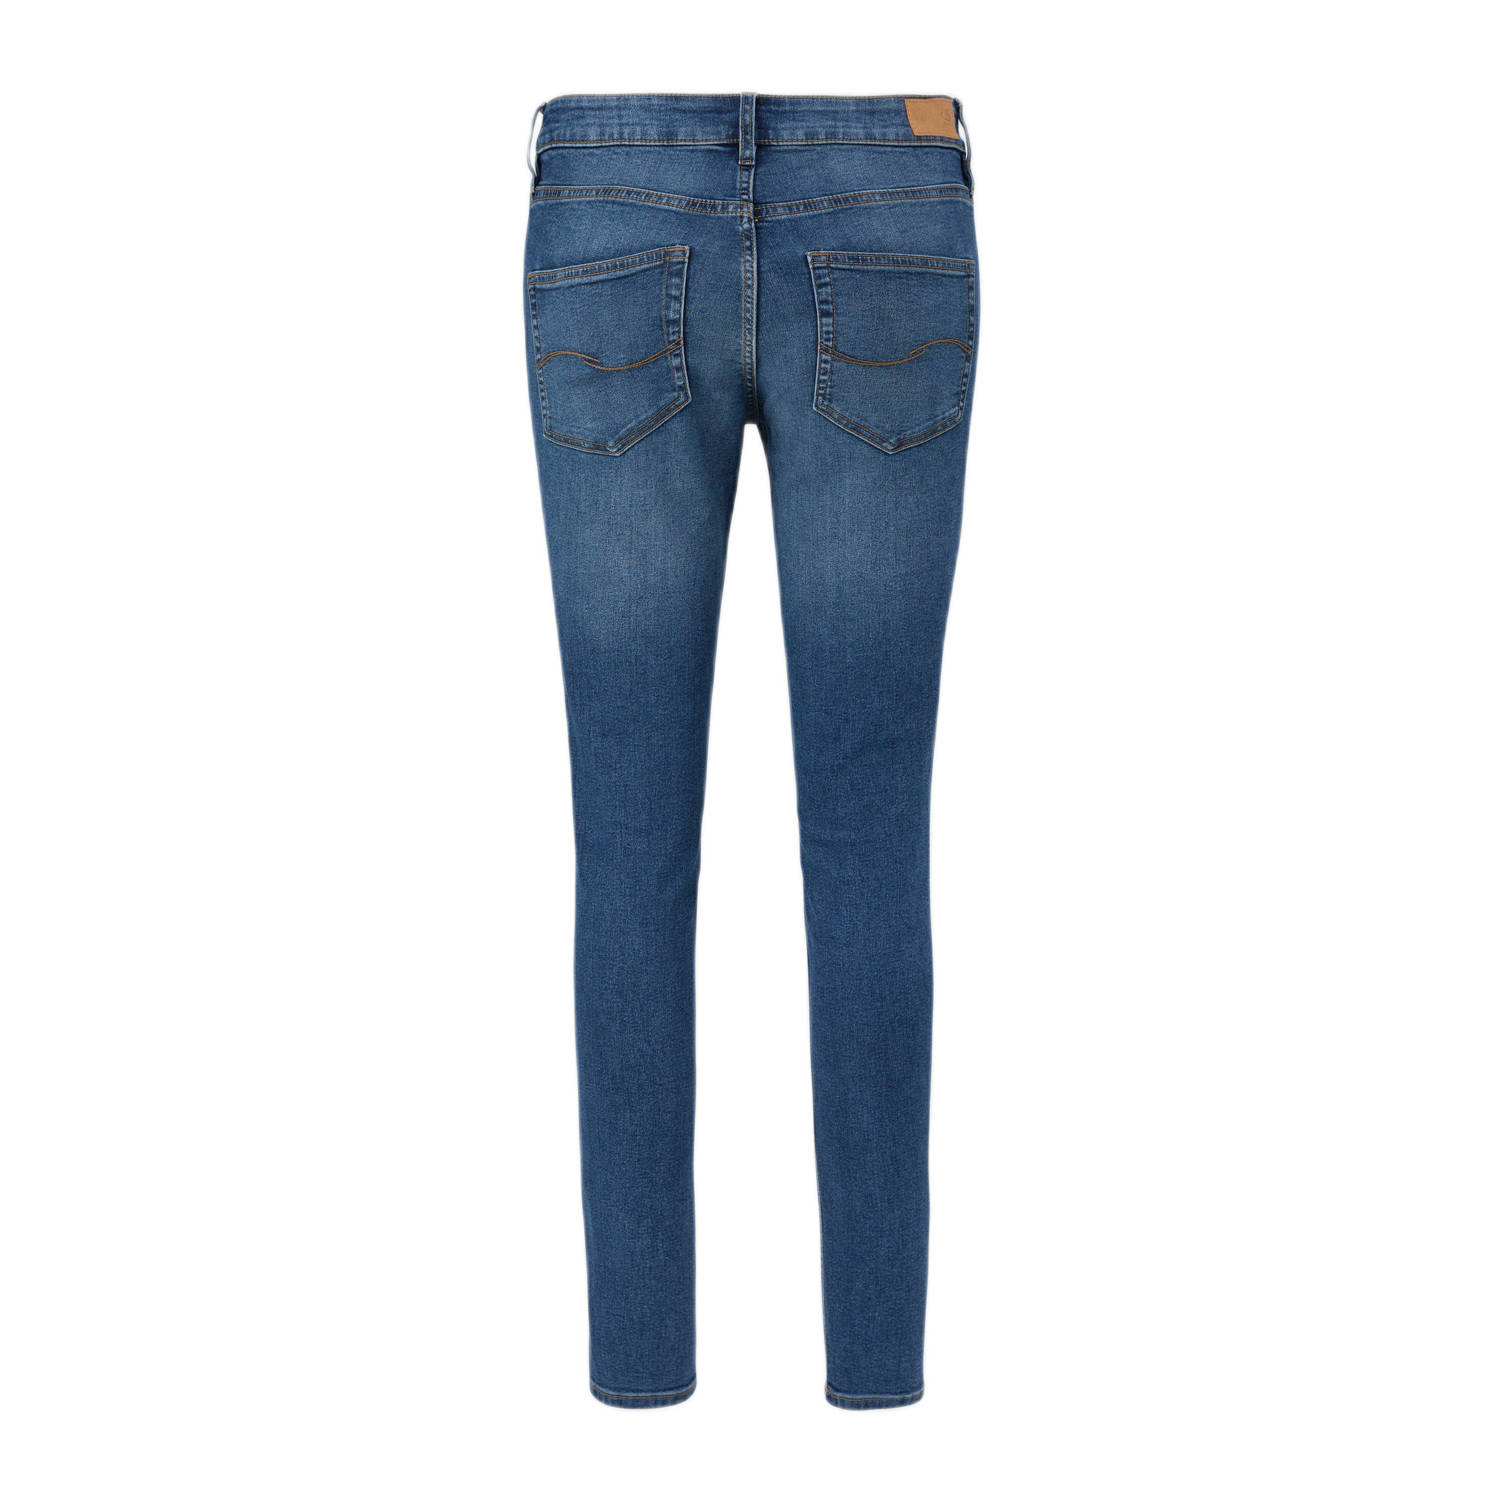 Q S by s.Oliver skinny jeans SADIE dark blue